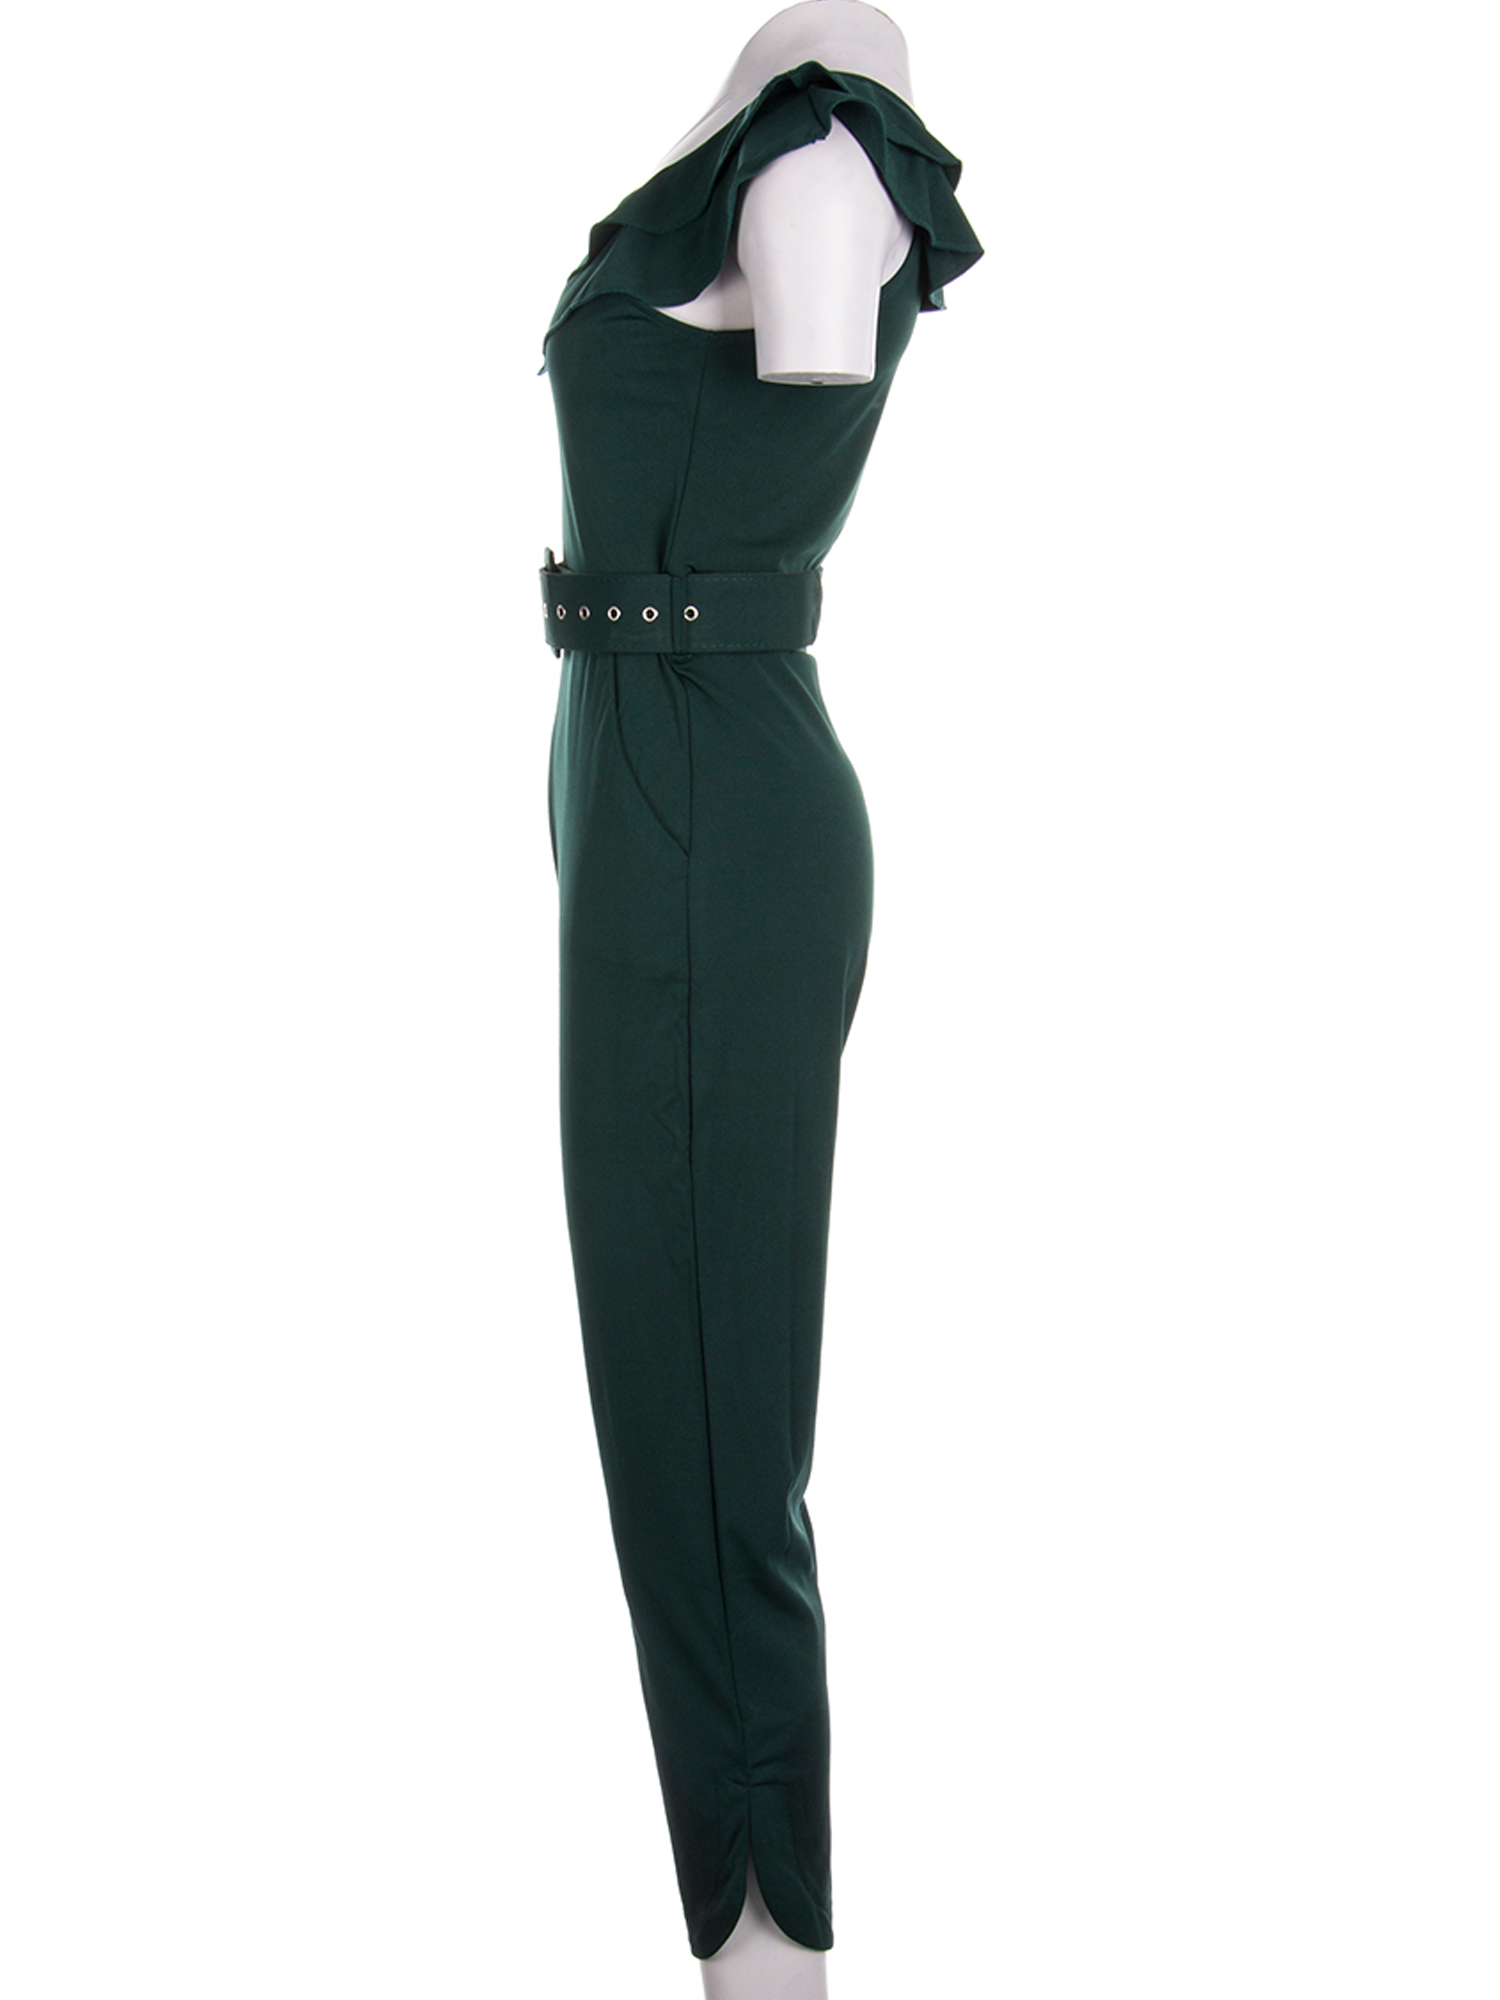 MERSARIPHY Women Formal Slim Solid Jmpsuits Ruffles Slash Neck Sashes Jumpsuit - image 4 of 5